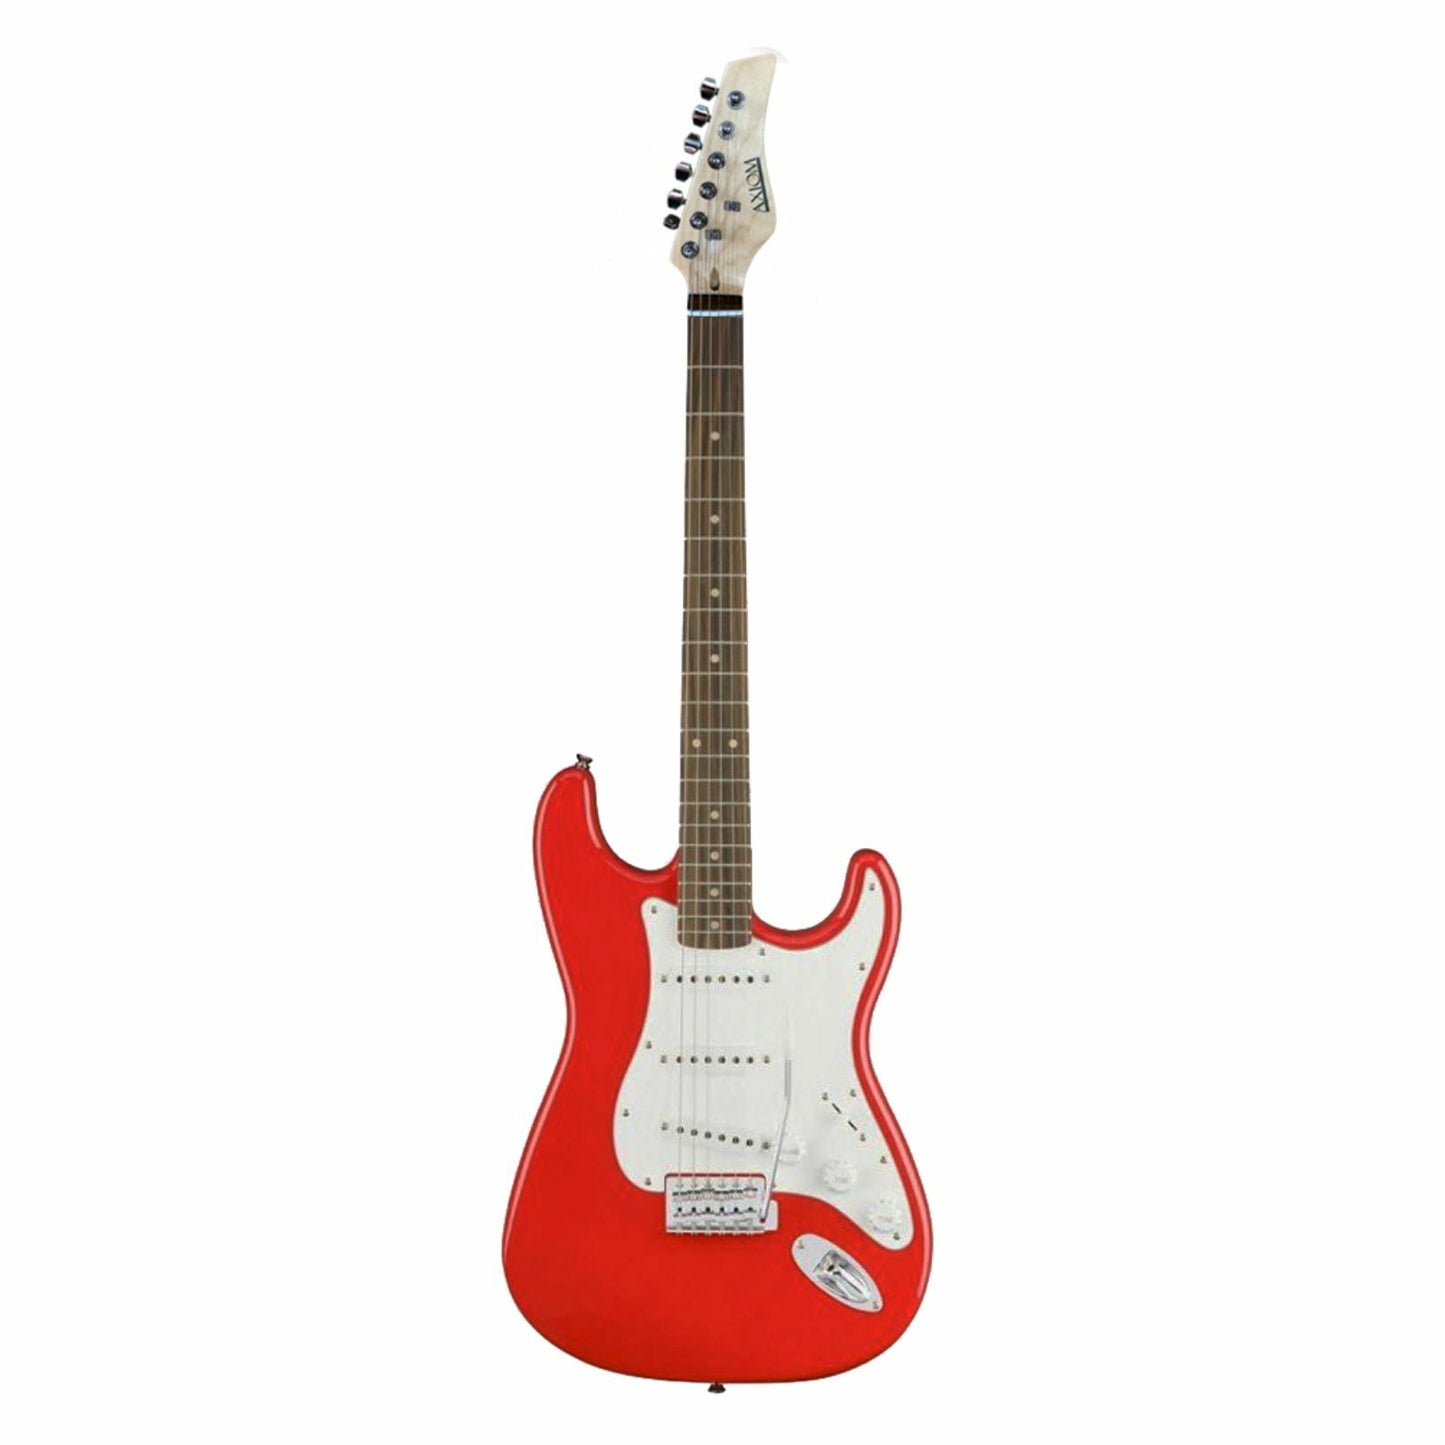 Axiom Beginner Electric Guitar Pack - Red